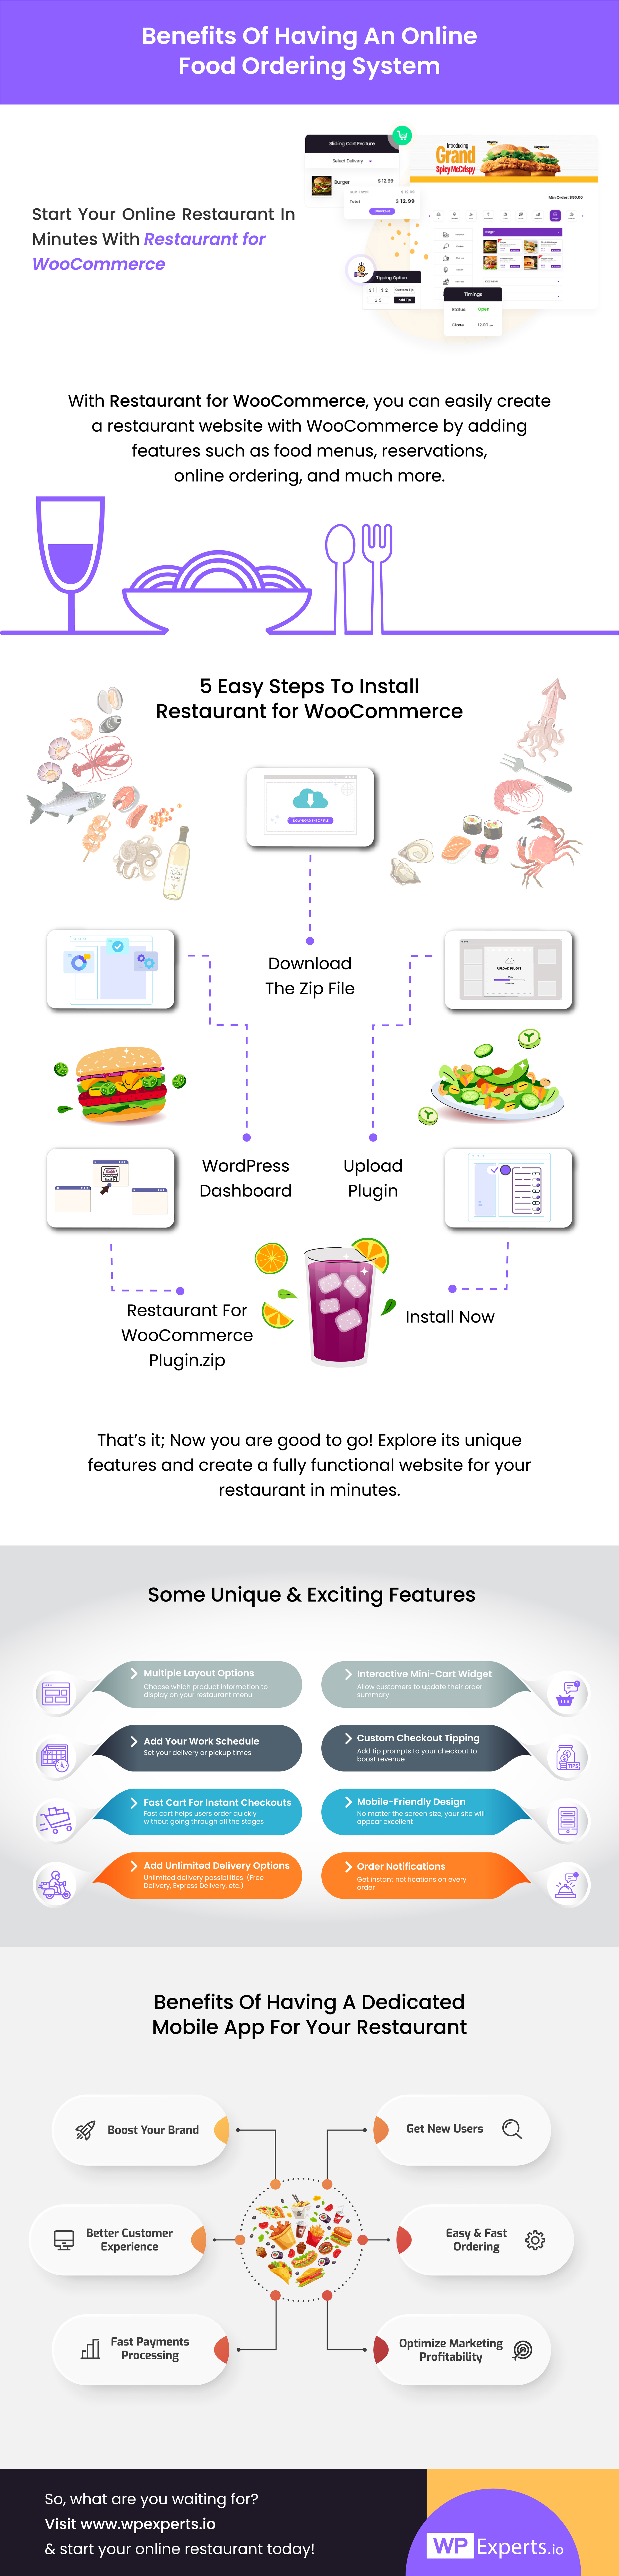 restaurant-blogs-infograpgic_Infographic copy 2